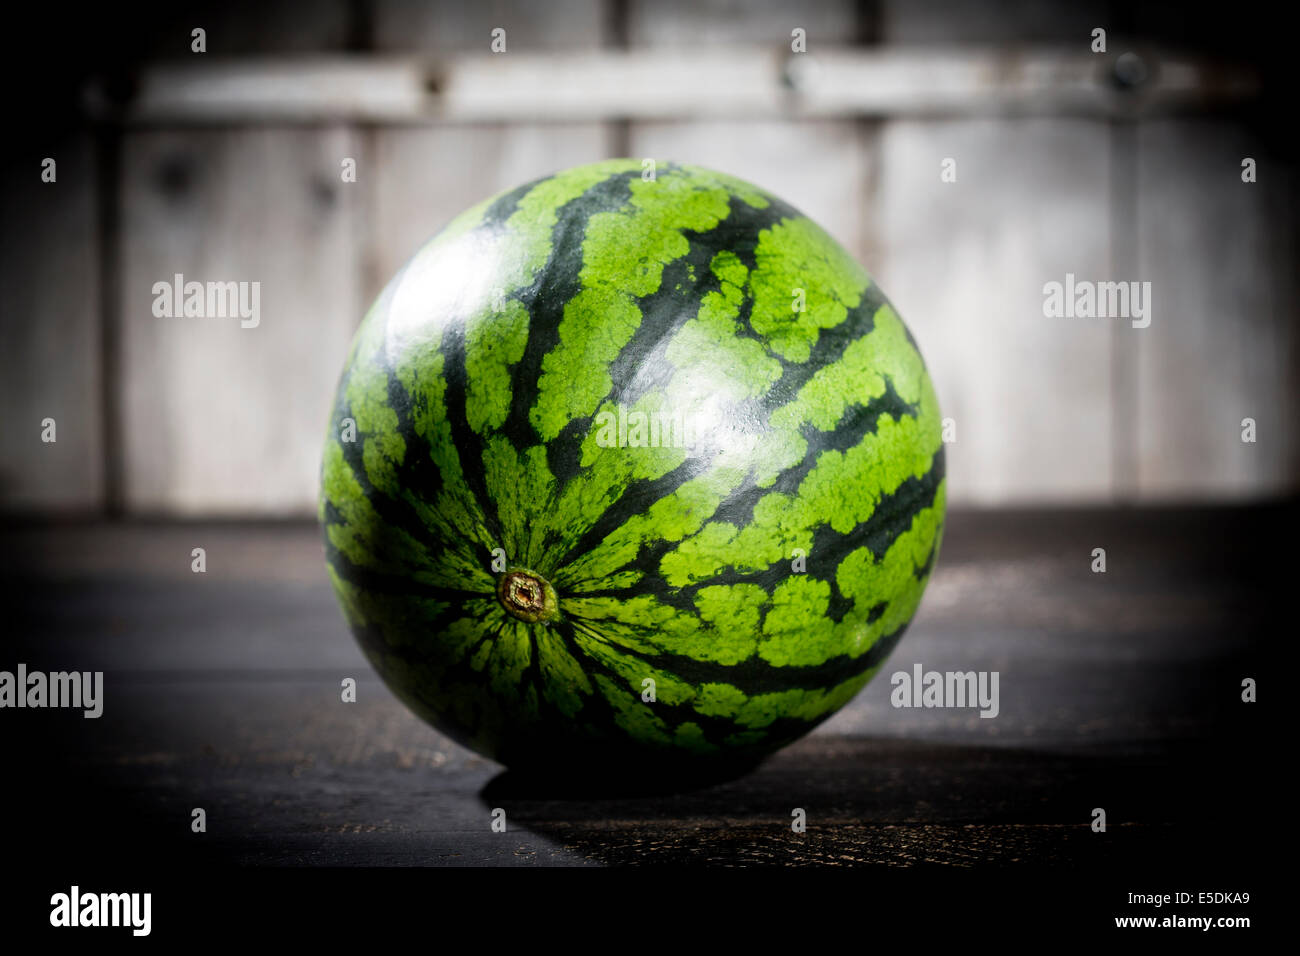 Whole watermelon, close up Stock Photo